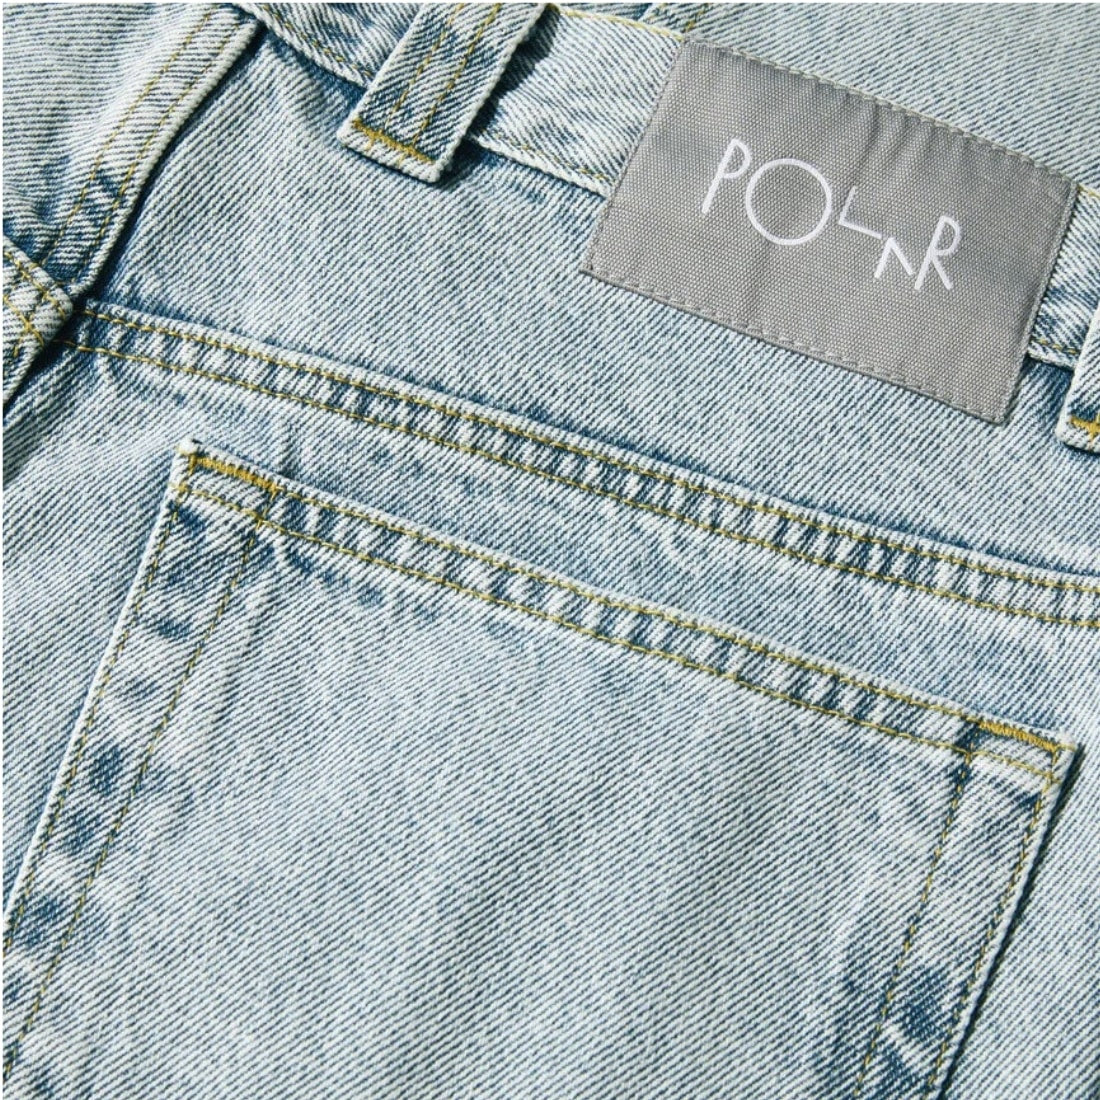 Polar 93! | Denim - Light Blue Sp24 - Mens Relaxed/Loose Denim Jeans by Polar